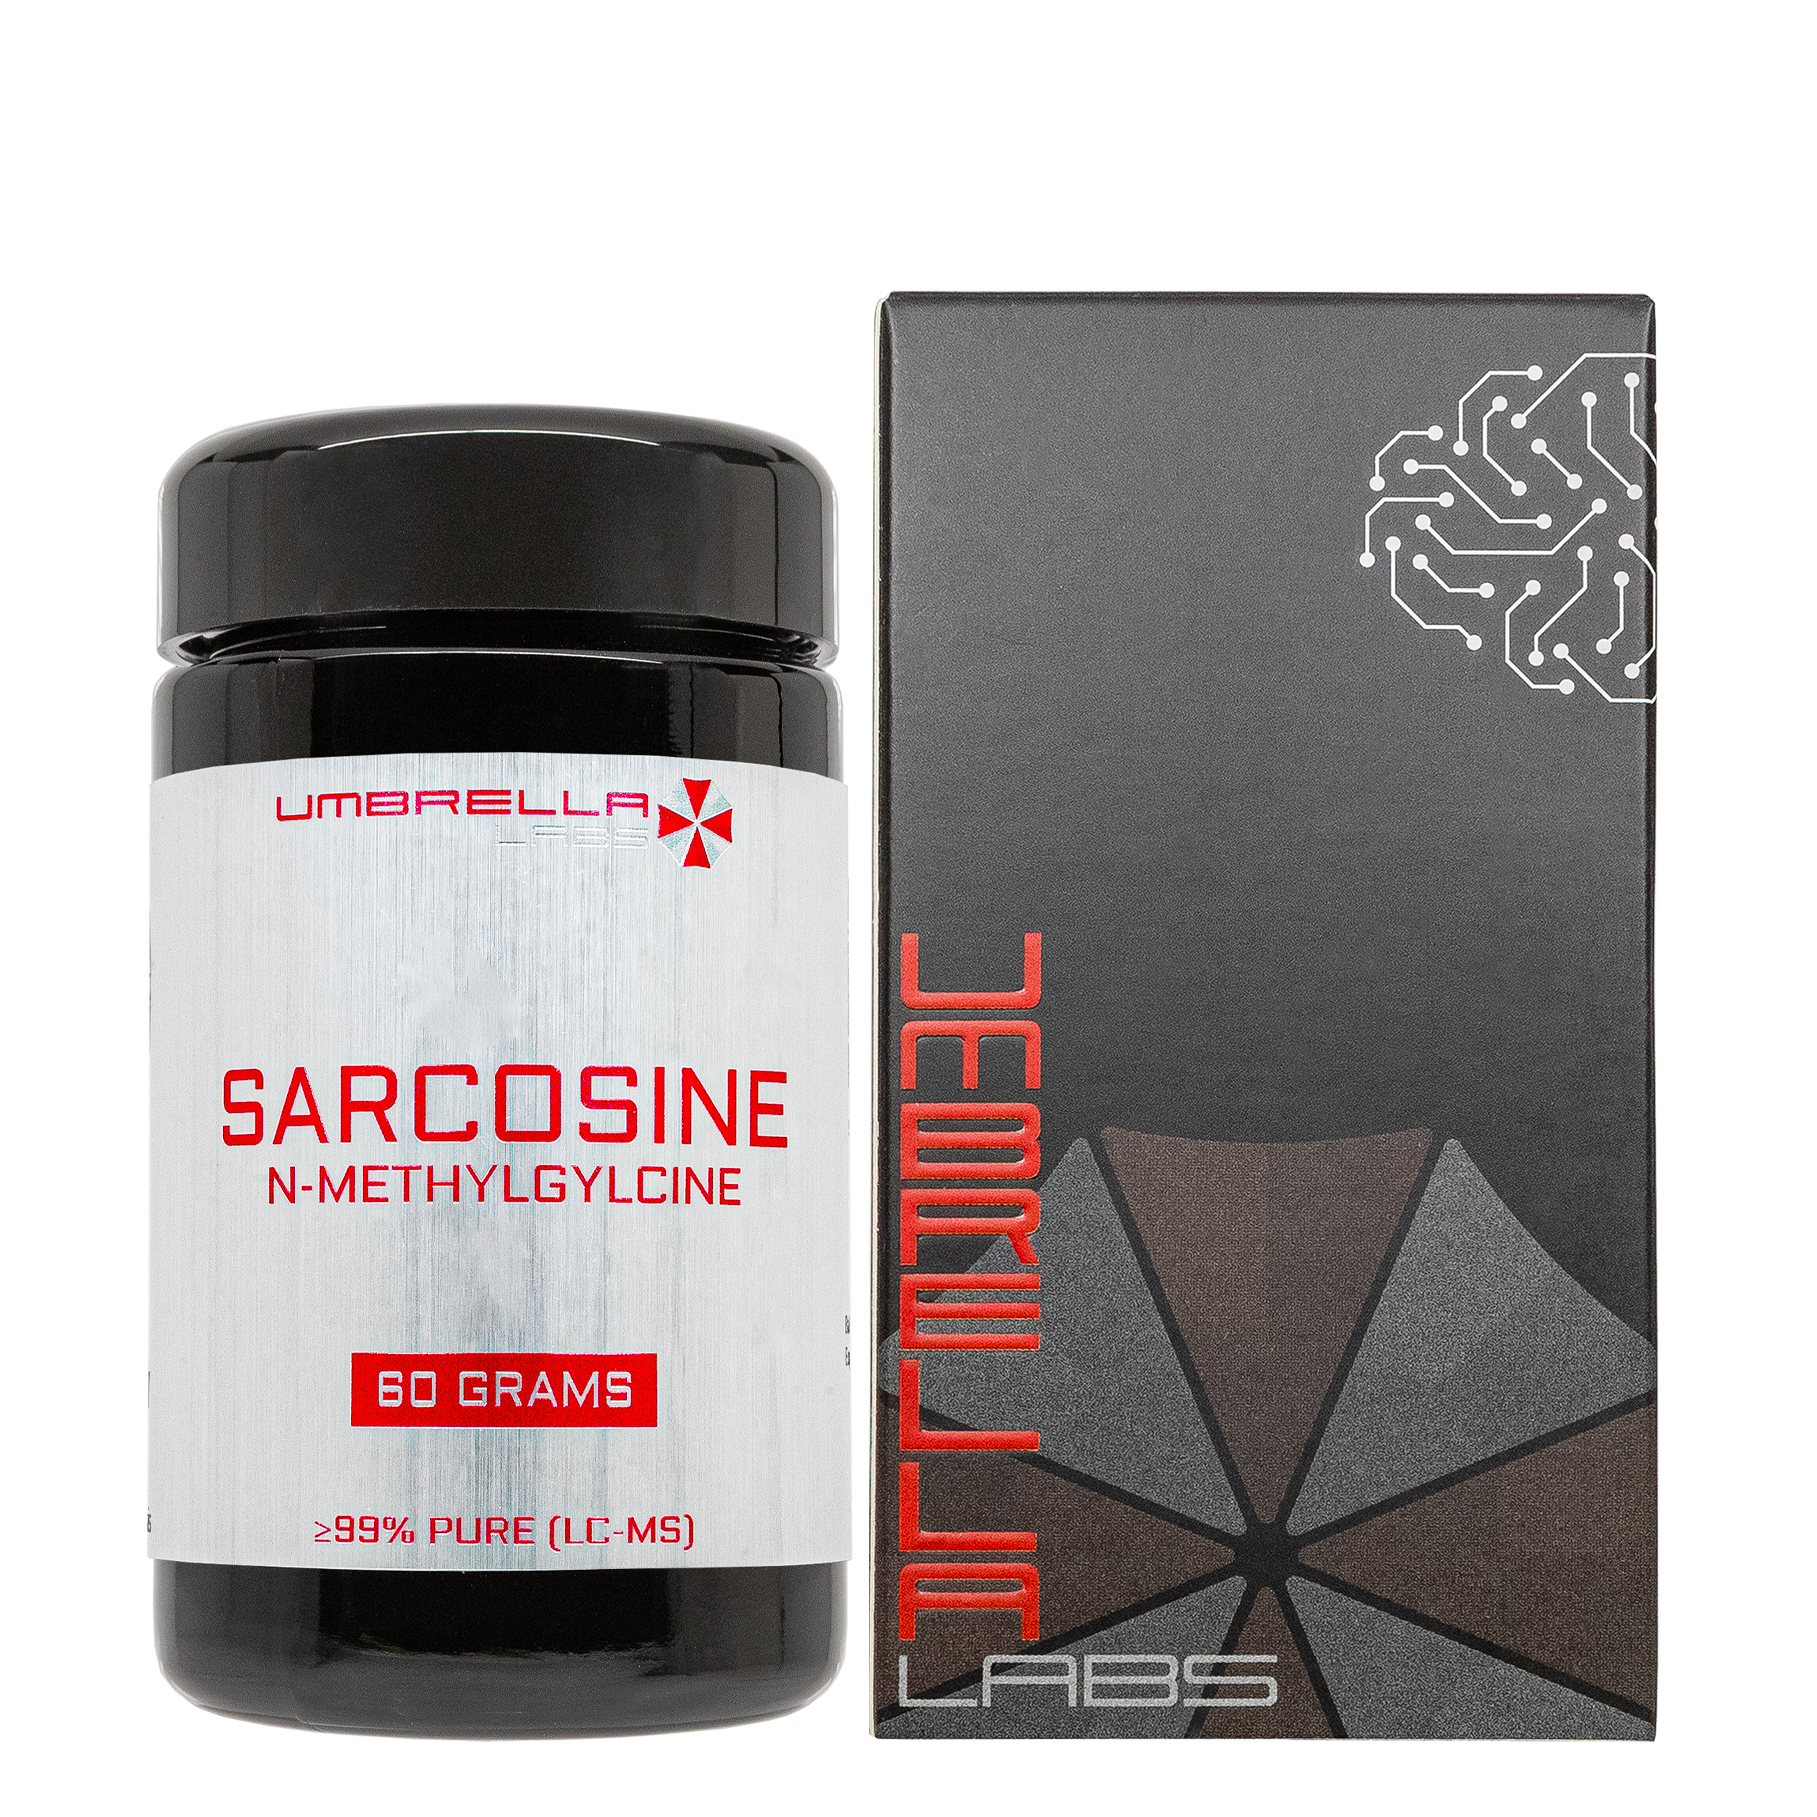 sarcosine powder (60 grams)